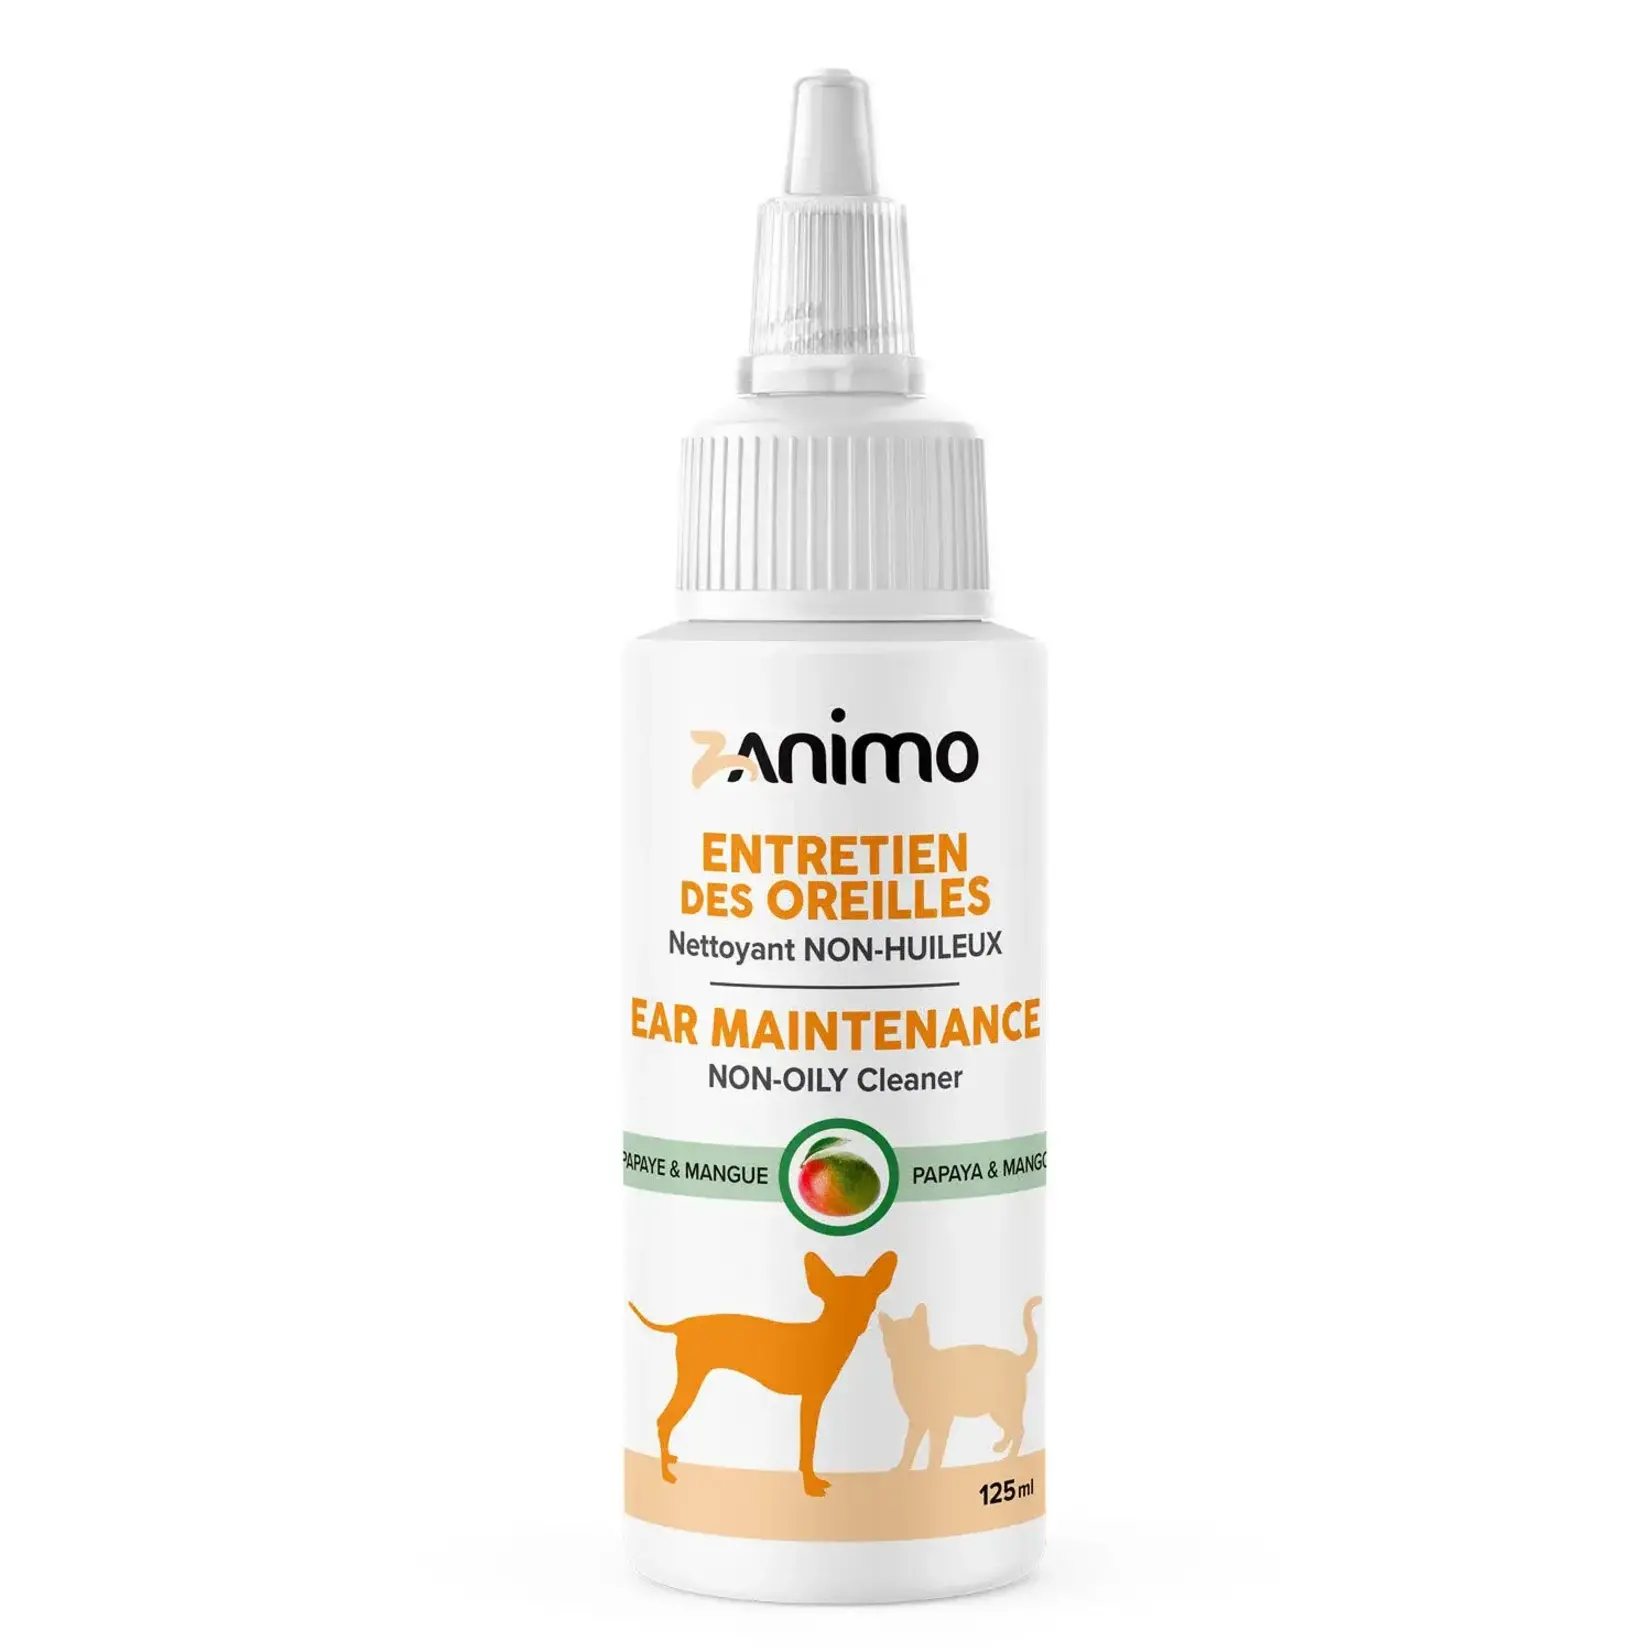 Zanimo Zanimo - Nettoyant non-huileux pour l'entretien des oreilles, 60ml